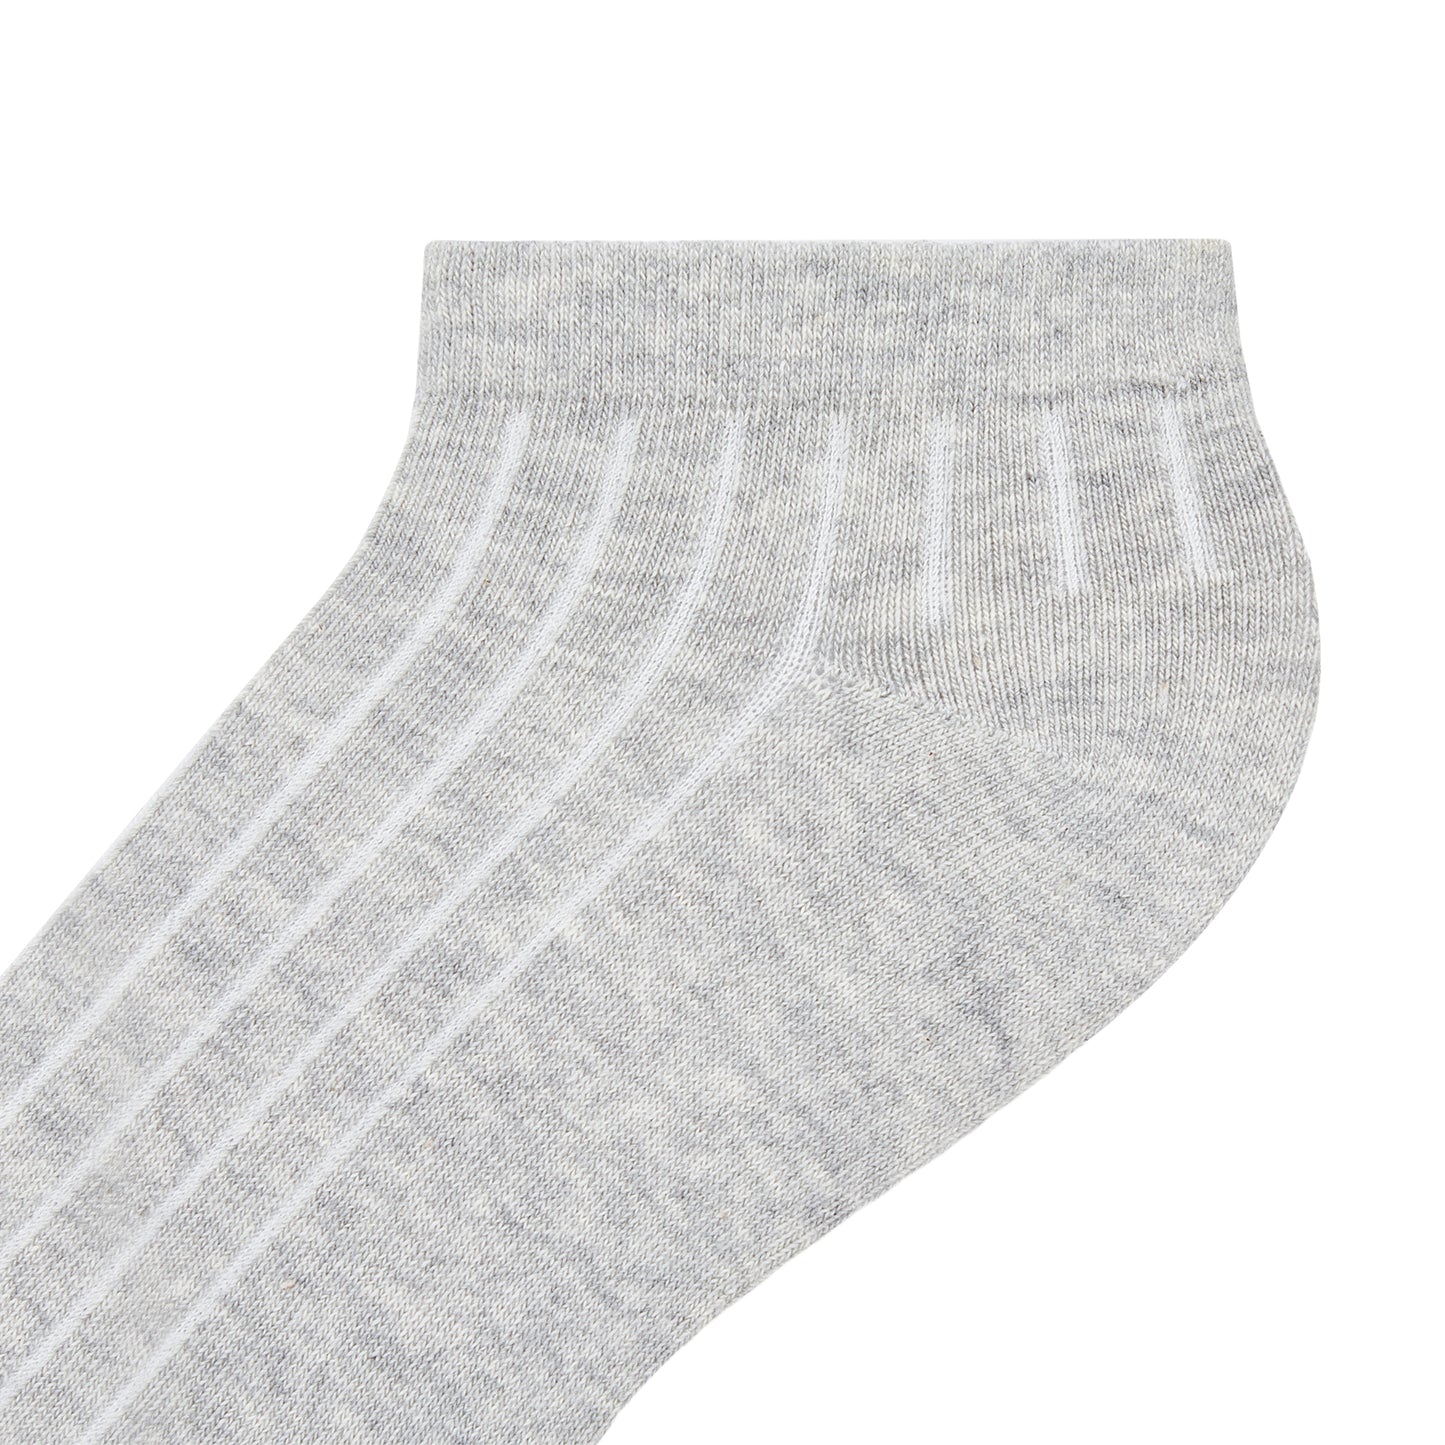 Striped Ankle Length Cotton Socks - IDENTITY Apparel Shop